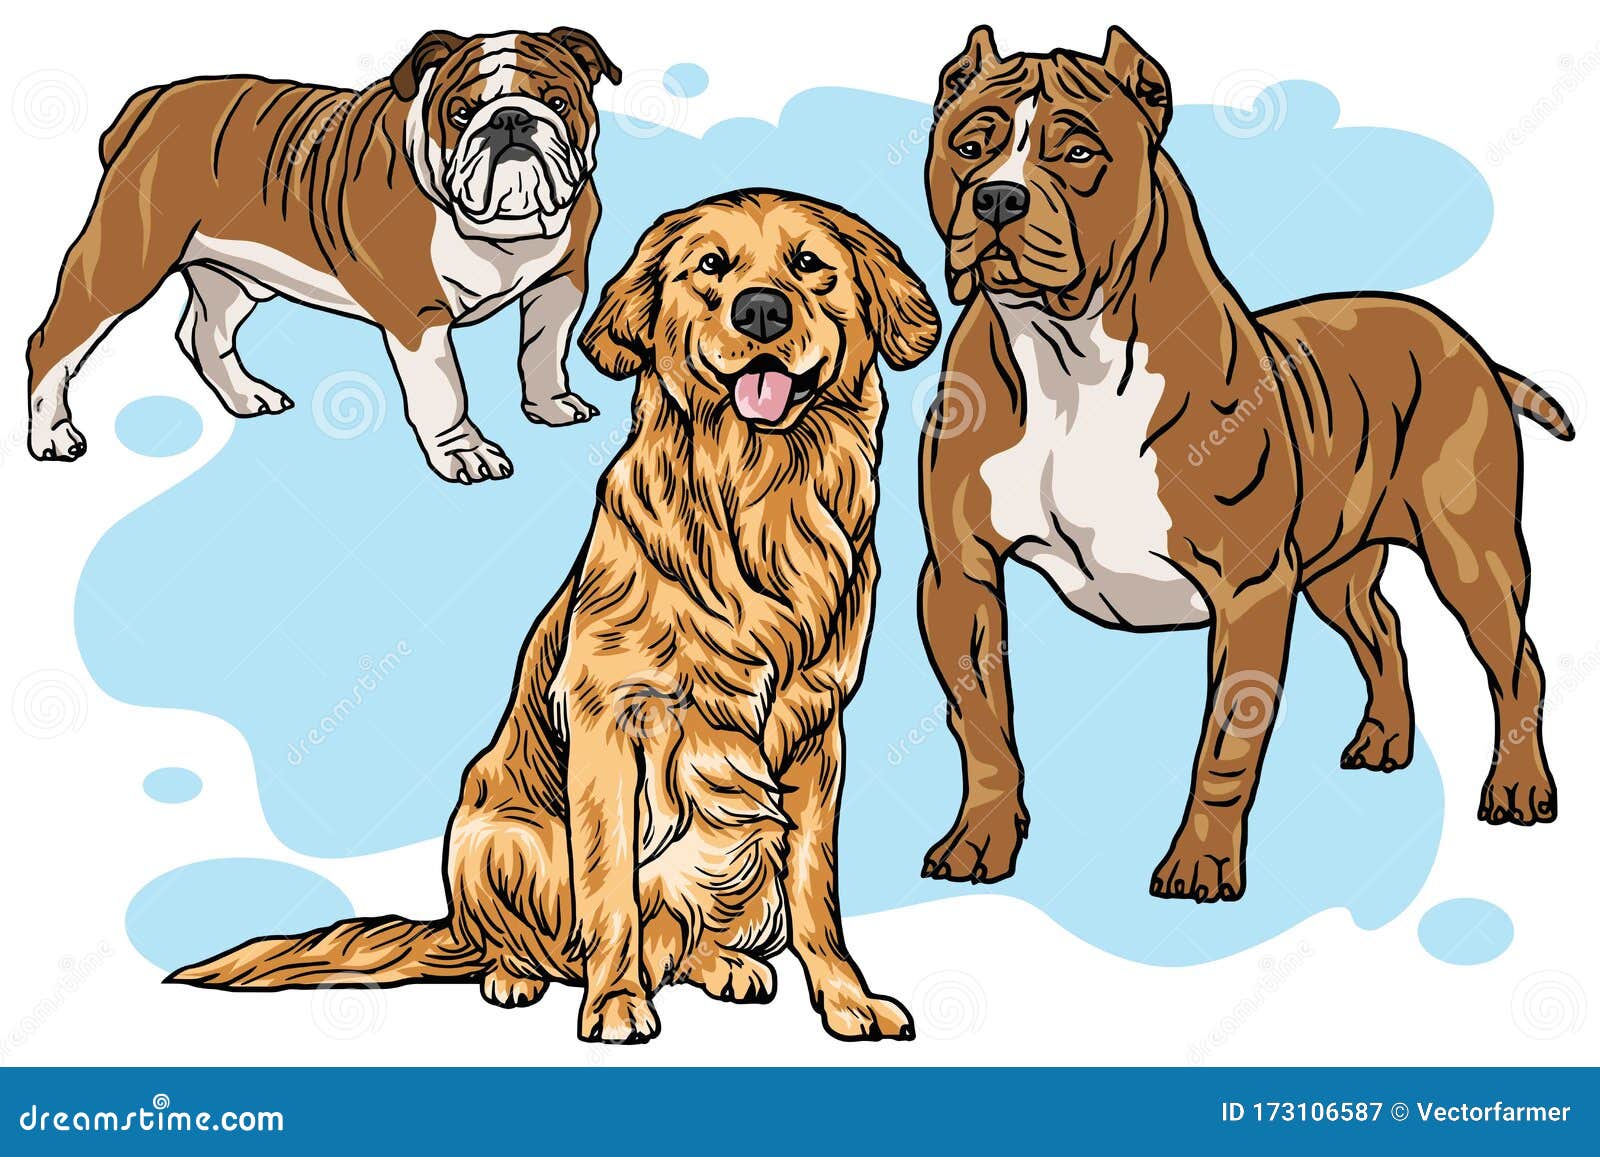 Dogs Vector Cartoon Drawing Set Collection. Bulldog, Golden Retriever,  Pitbull Illustration Stock Vector - Illustration of cartoon, book: 173106587